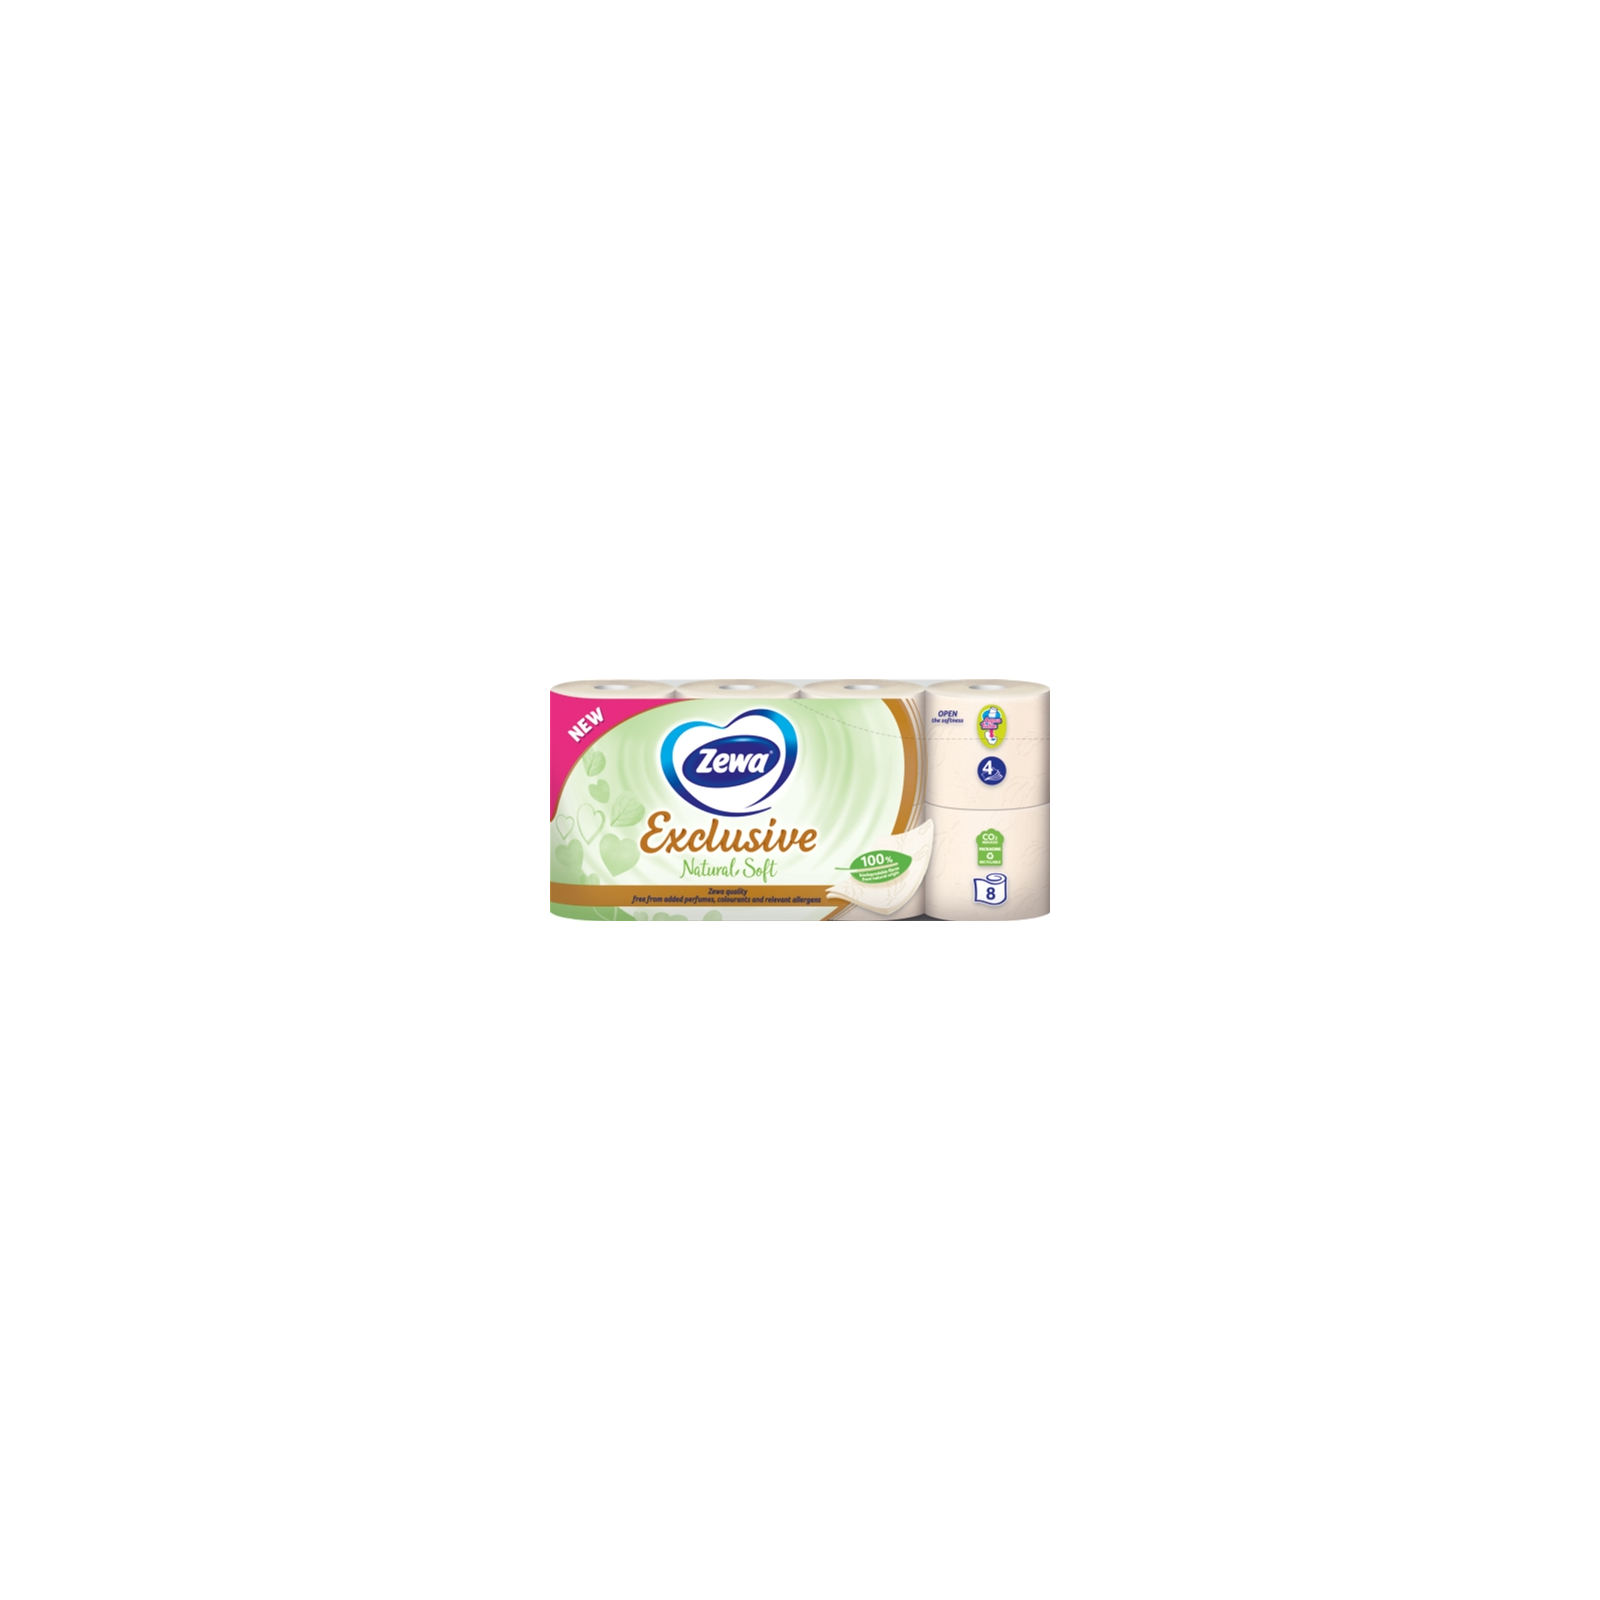 Туалетний папір Zewa Exclusive Natural Soft 4 шари 16 рулонів (7322541361918) зображення 2